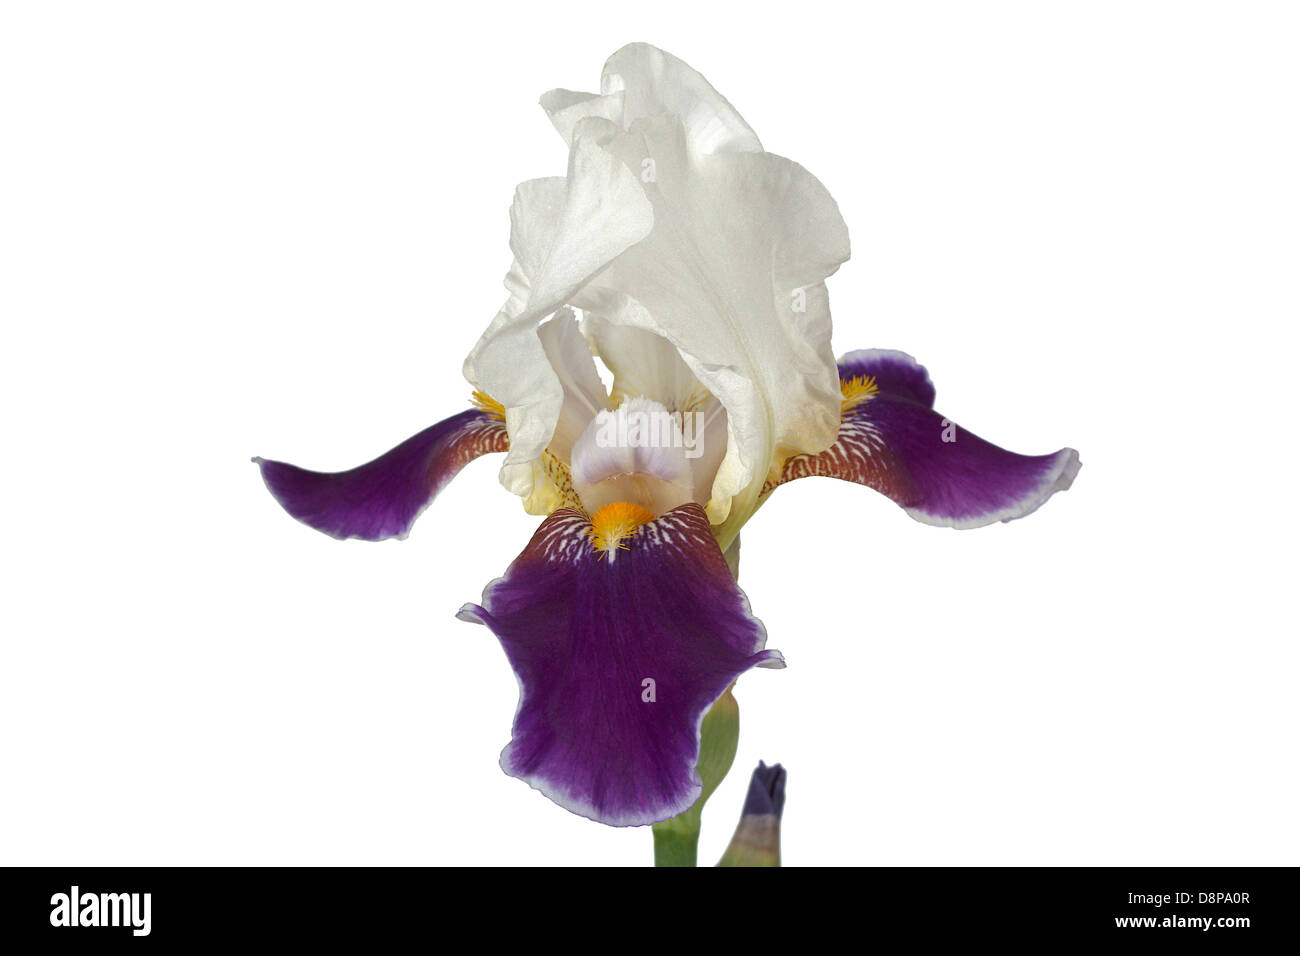 Flower of iris, lat. Iris, isolated on white backgrounds Stock Photo